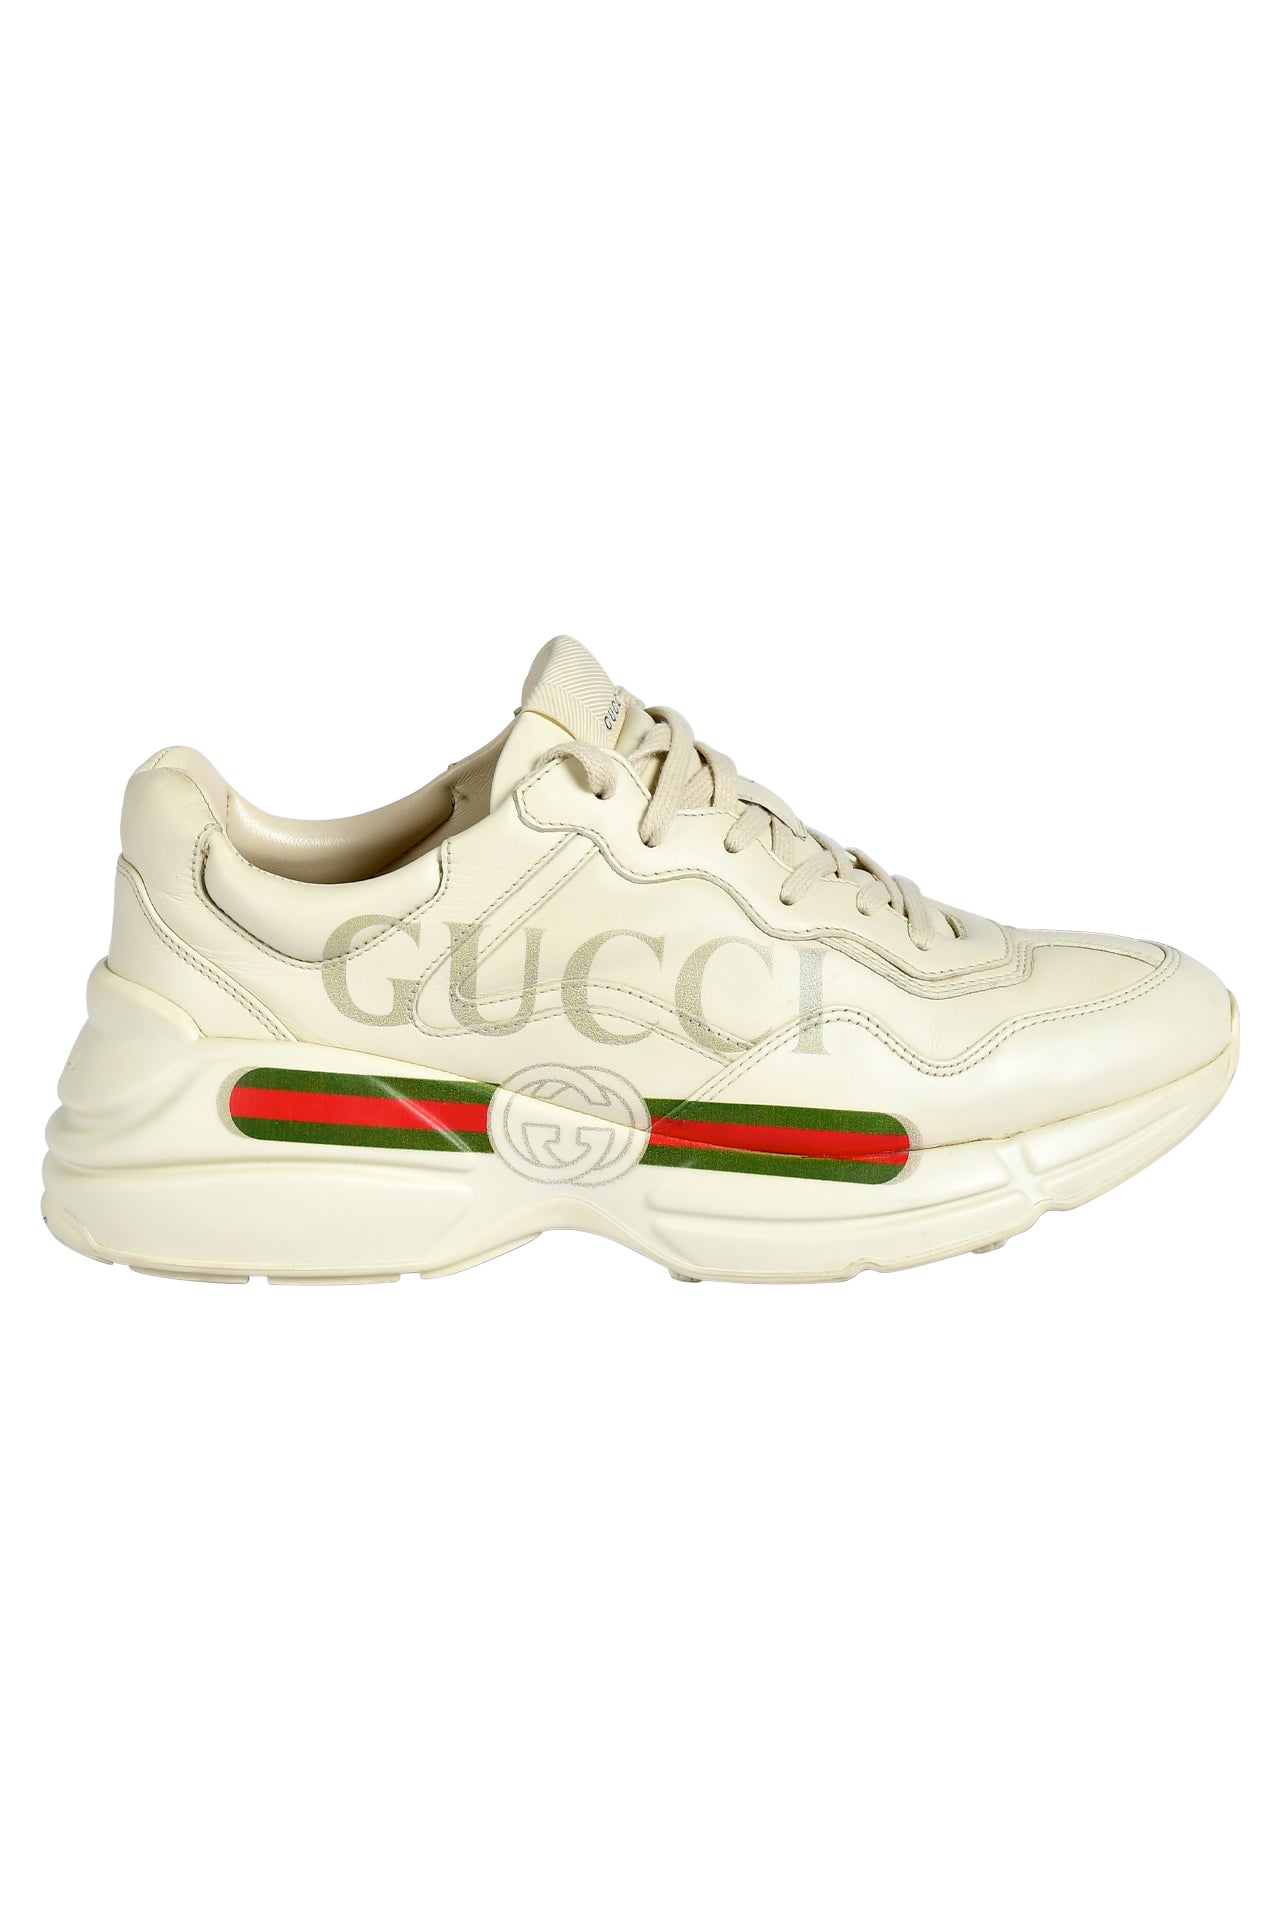 Gucci Calfskin Printed Rhyton Sneakers US 7.5